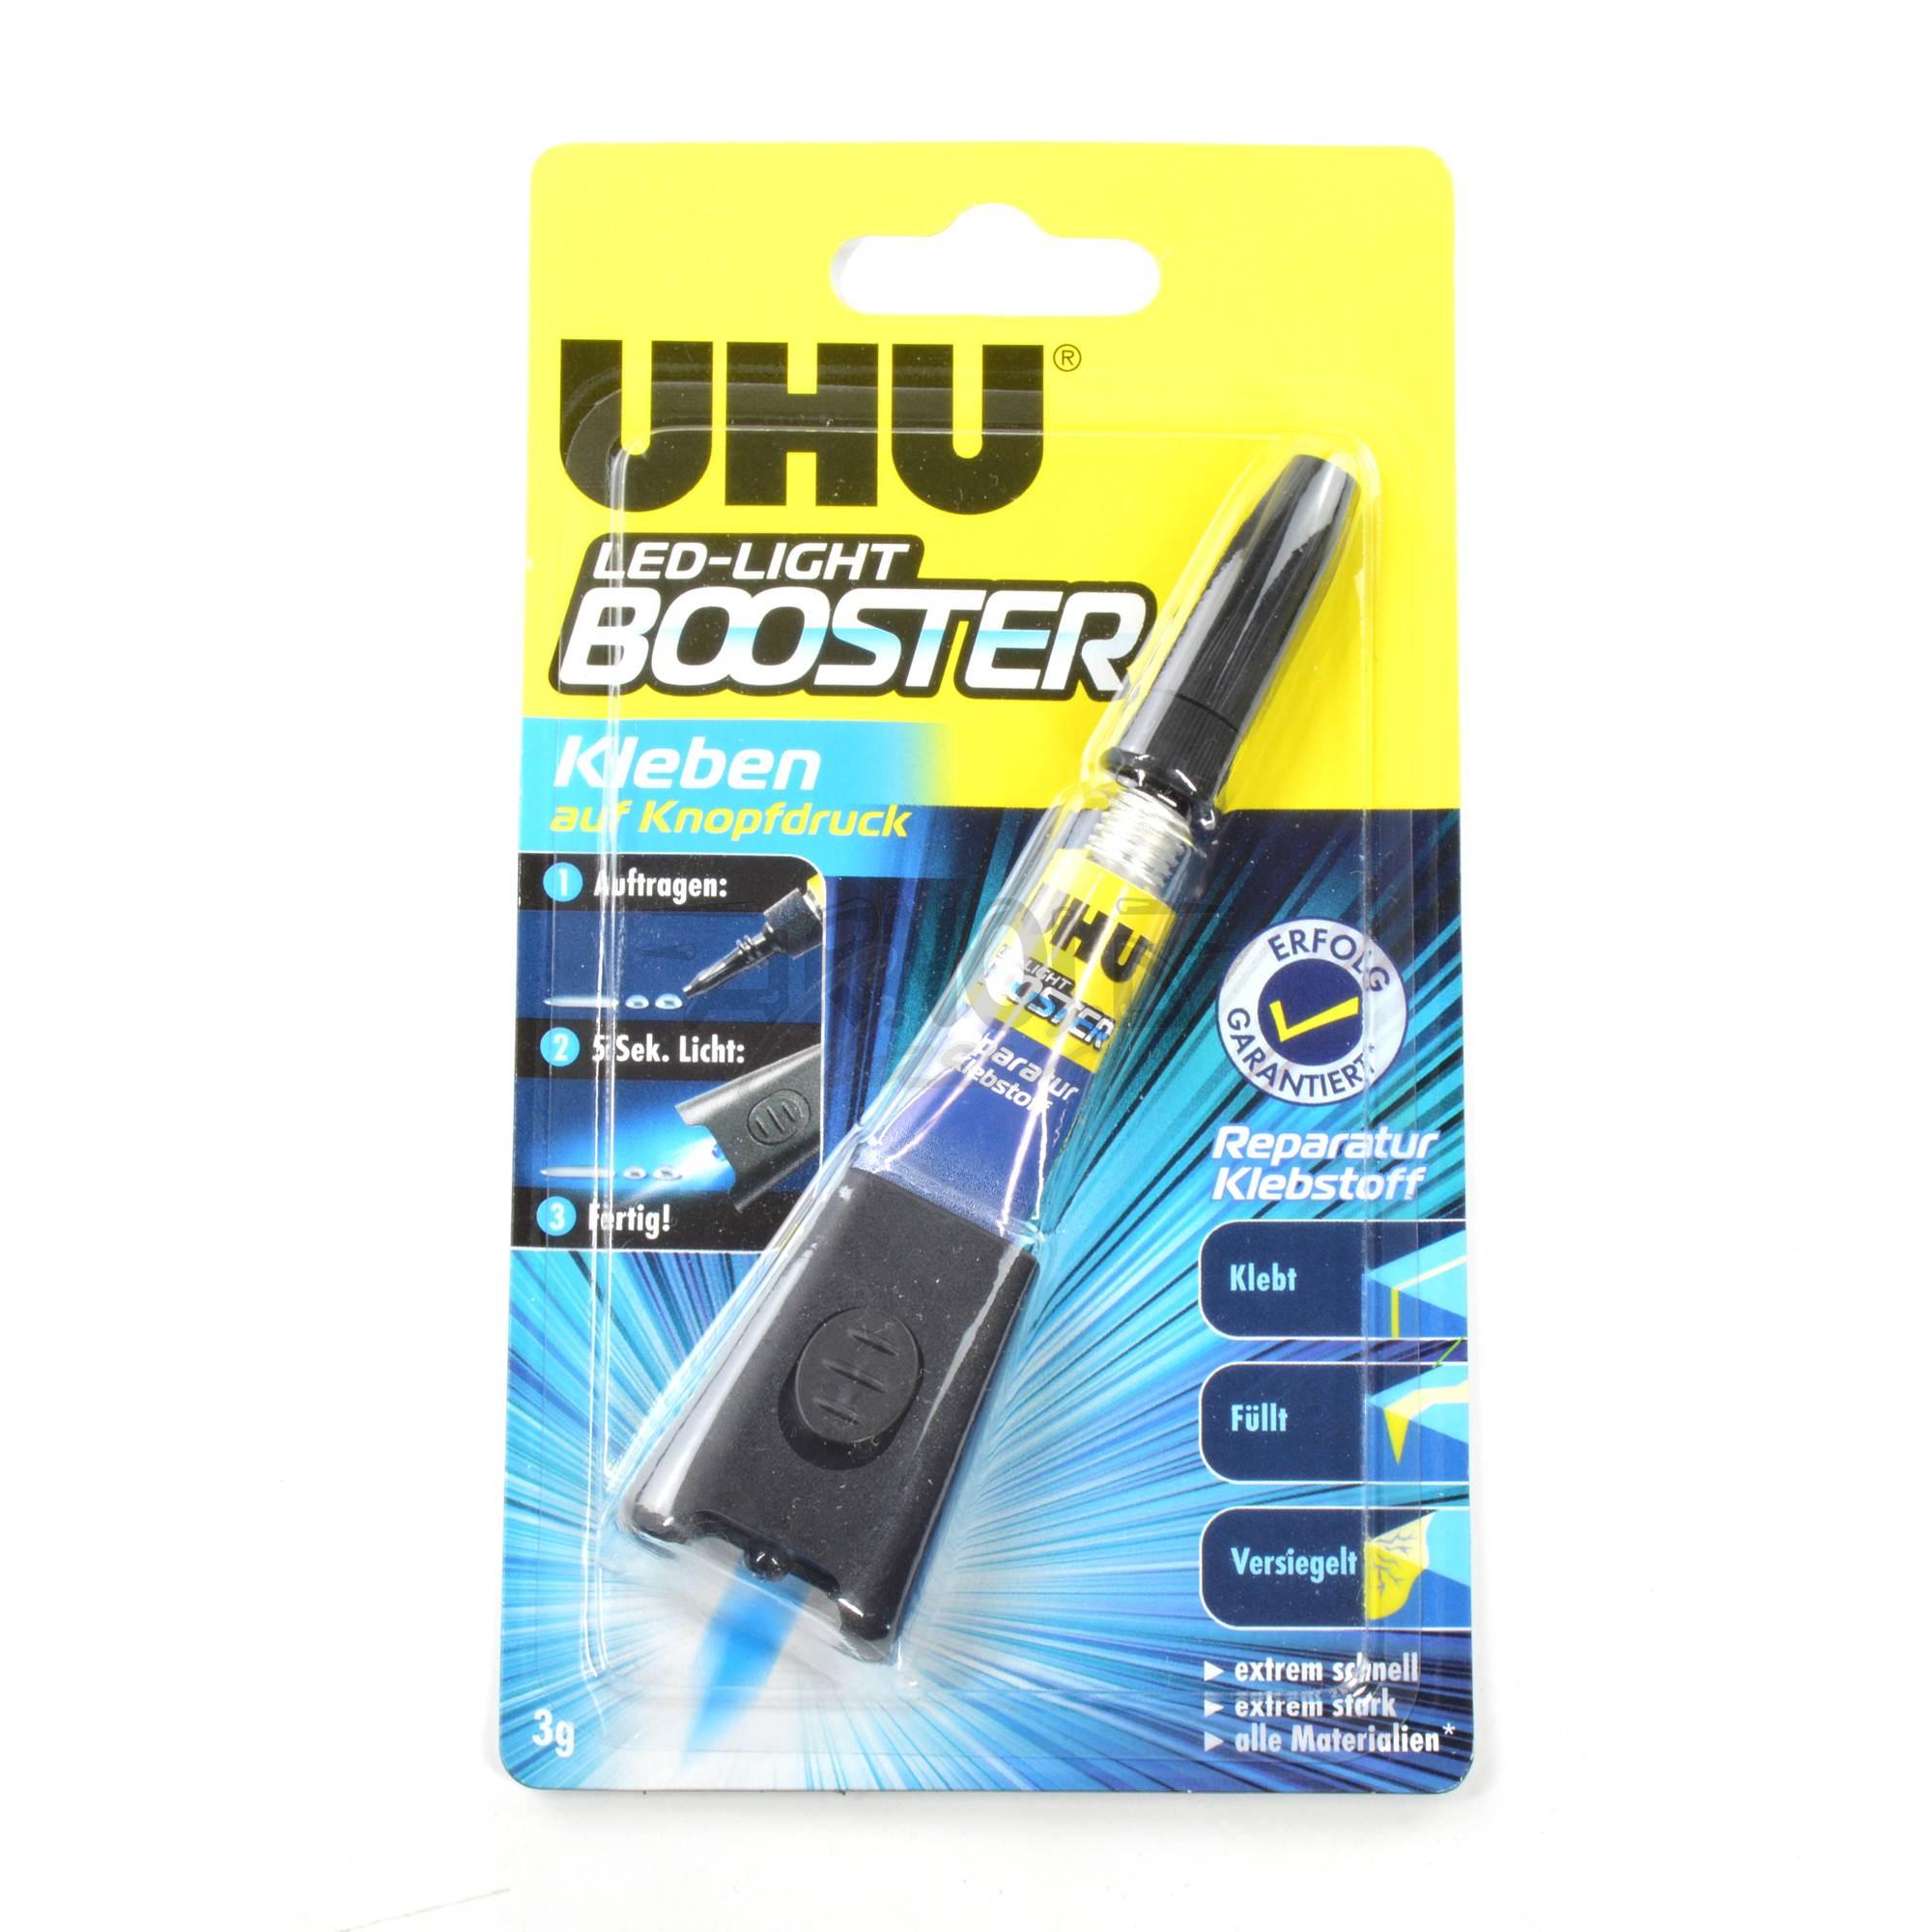 UHU Led Booster UV Adhesive ultraviolet light